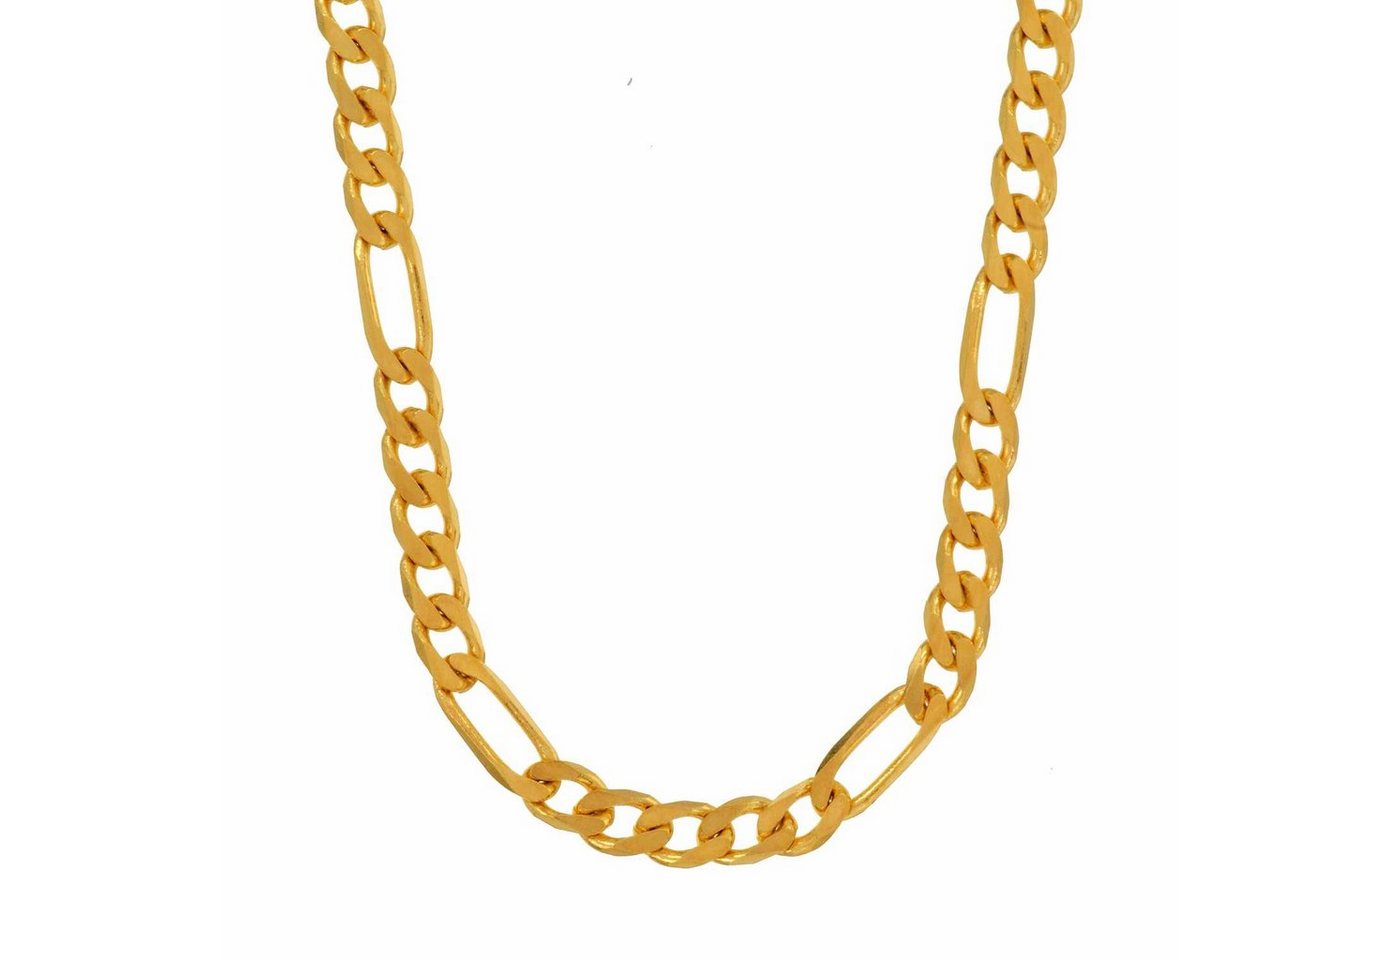 HOPLO Goldkette Goldkette Figarokette Länge 45cm - Breite 3,4mm - 333-8 Karat Gold, Made in Germany von HOPLO